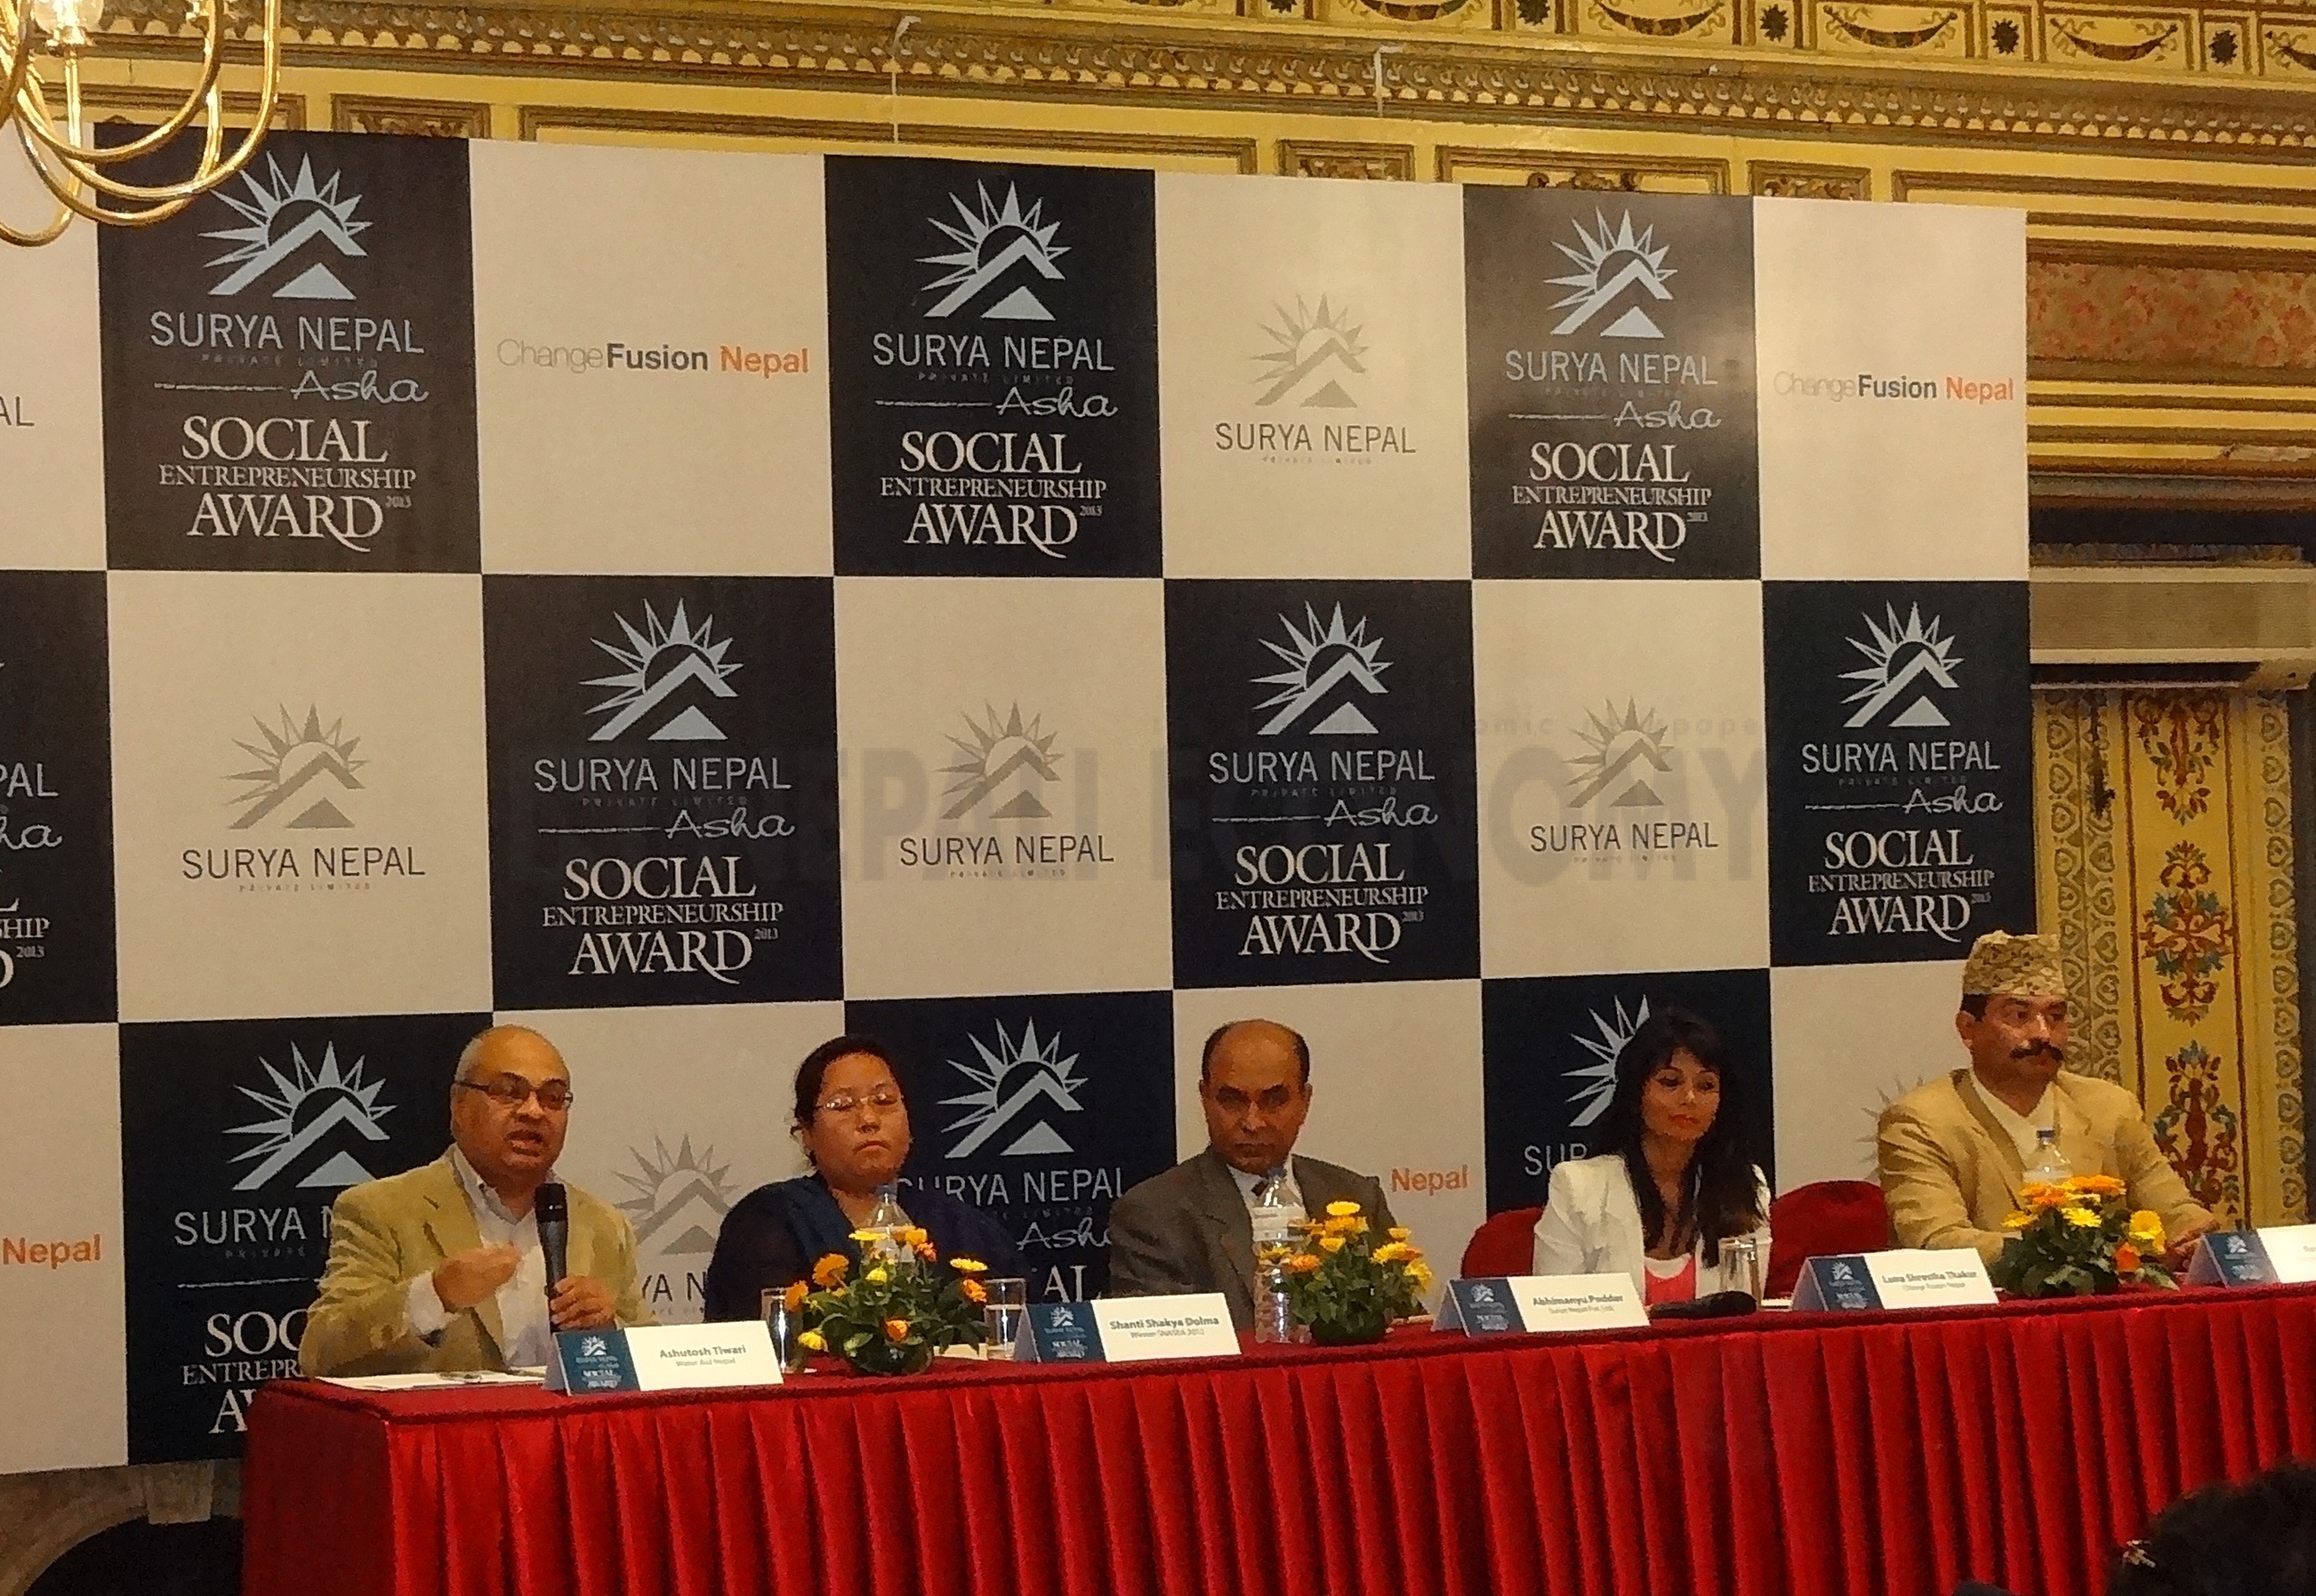 Surya Nepal Asha Social Entrepreneurship Awards 2013 top 10 finalists